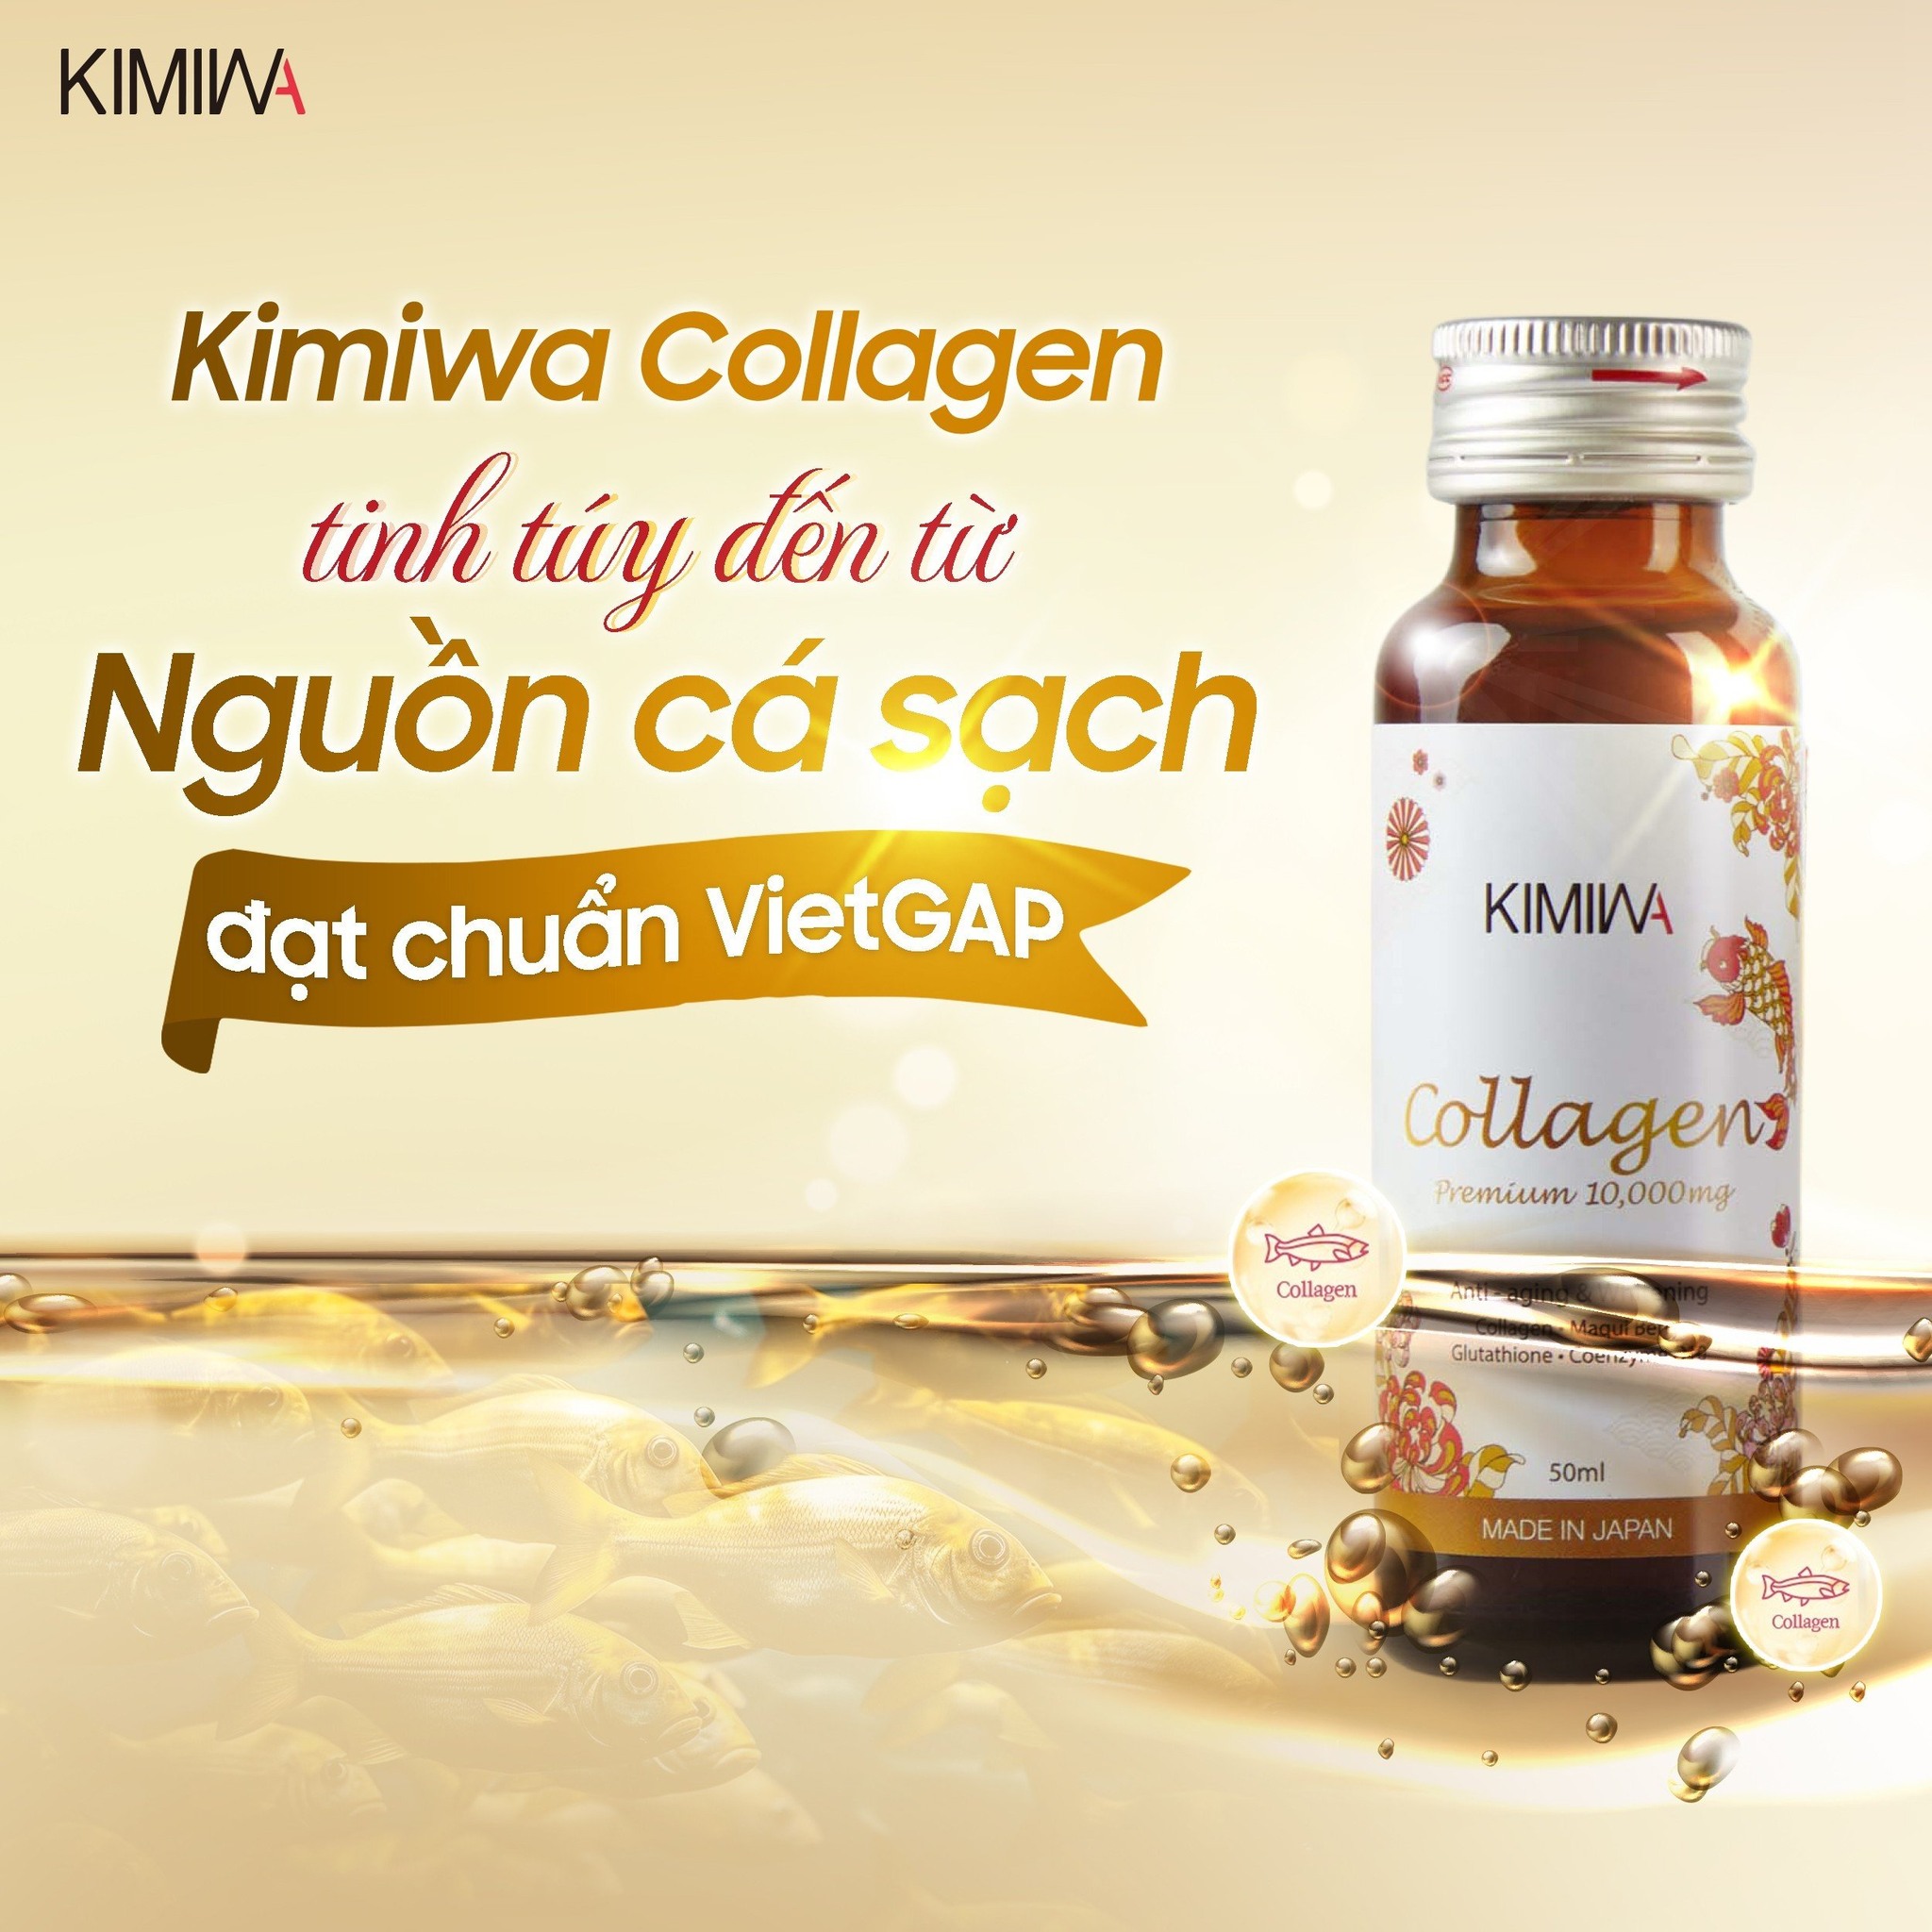 Kimiwa Collagen - collagen từ da cá đạt chuẩn VietGap